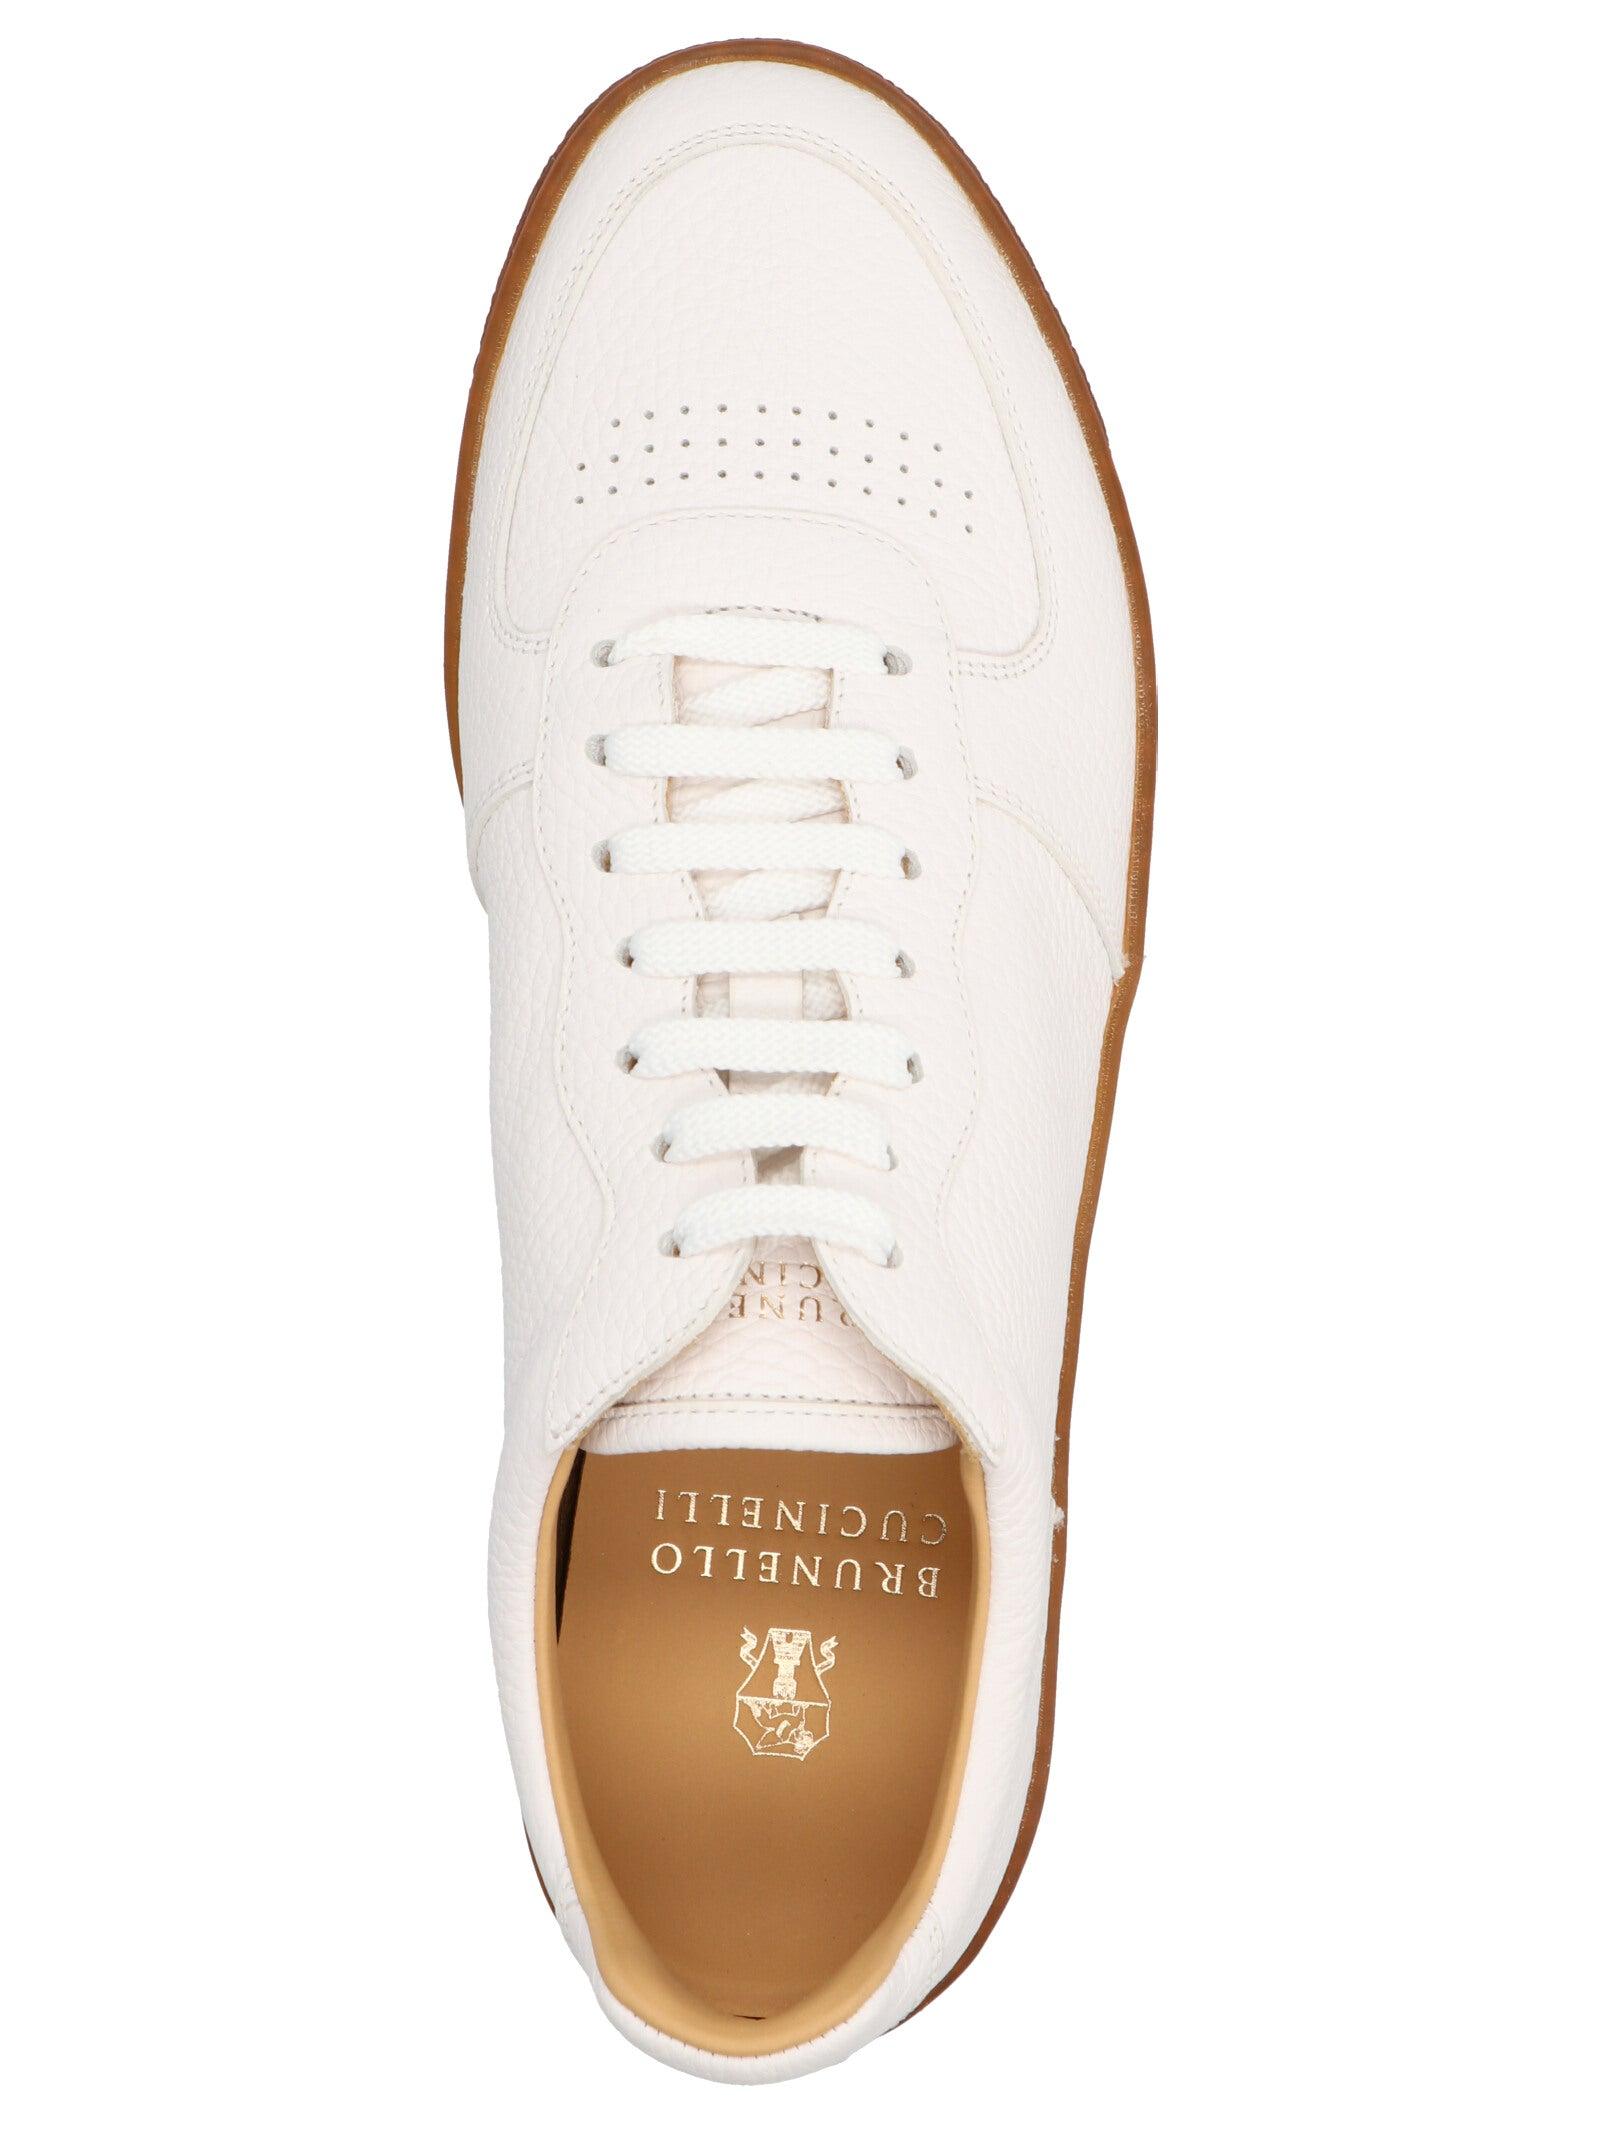 Brunello Cucinelli 'Grained Leather' Gum Sole Sneakers White 45 Mens